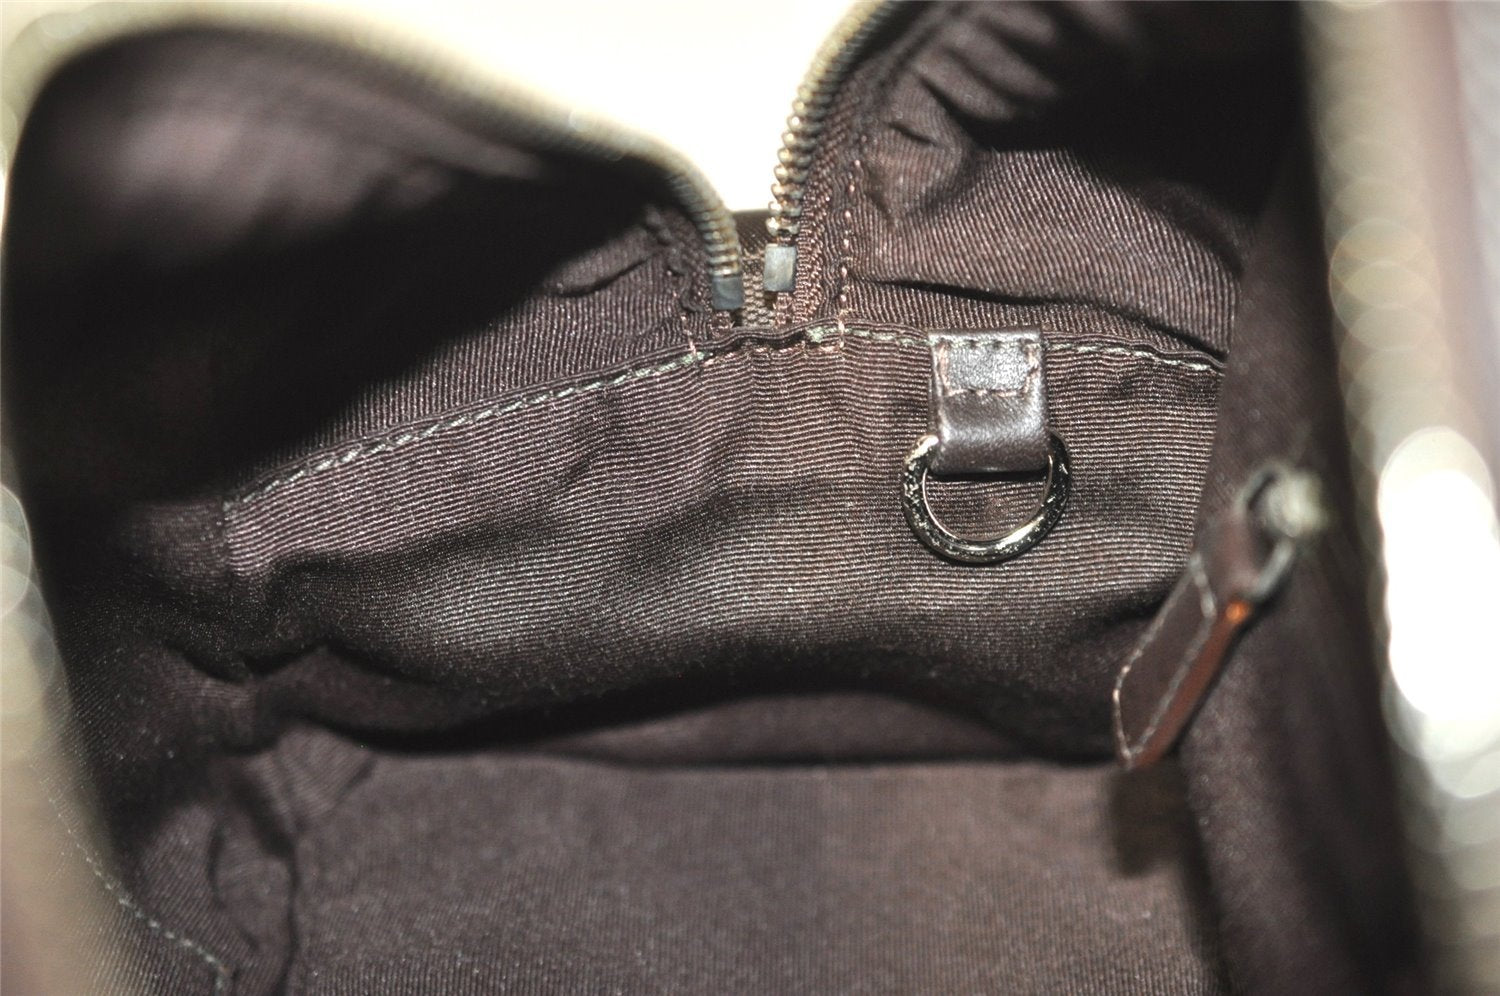 Authentic COACH Signature Shoulder Hand Bag Canvas Leather 10078 Brown 4007I